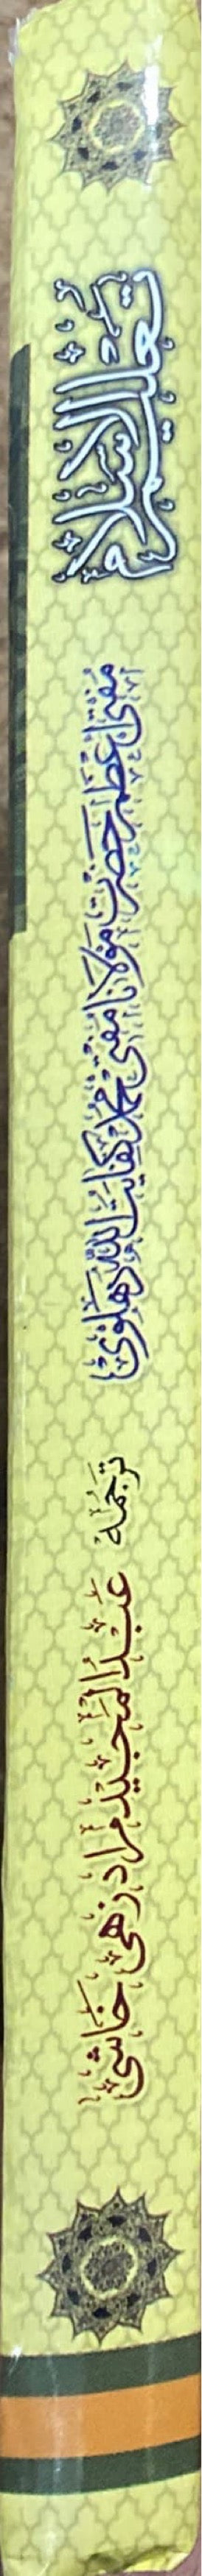 Urdu Talim Al Islam